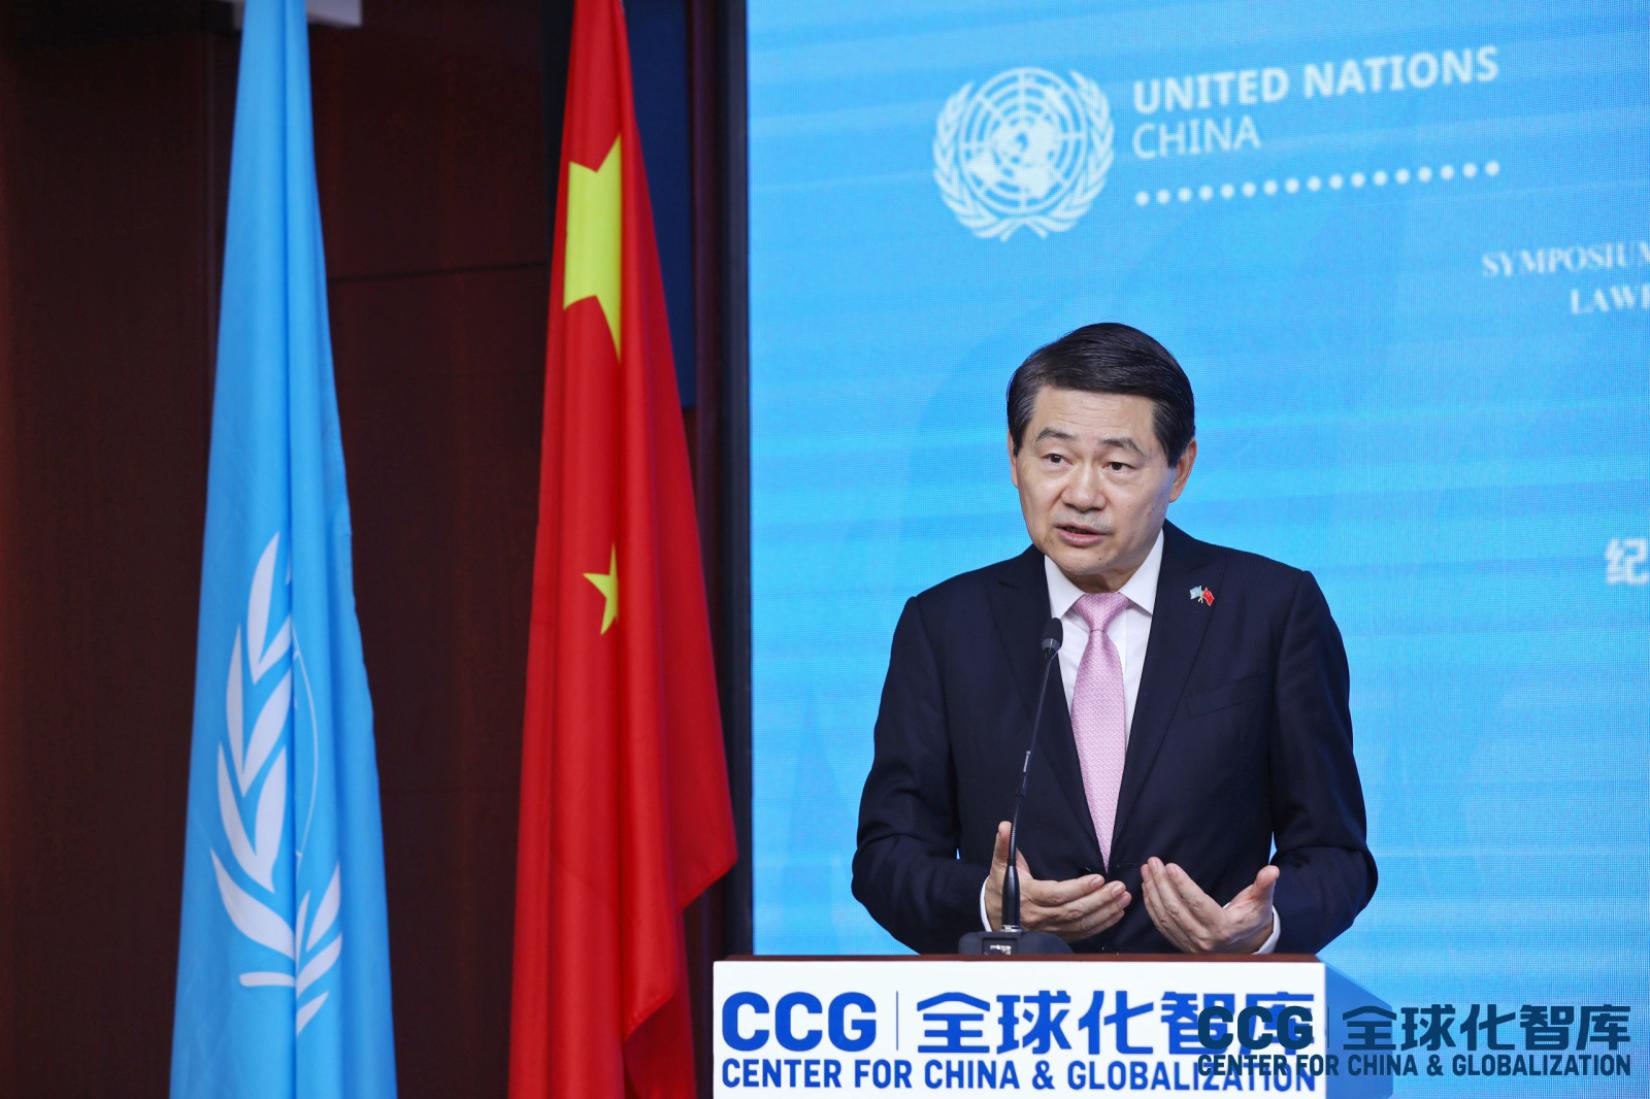 President of Center for China and Globalization, Wang Huiyao